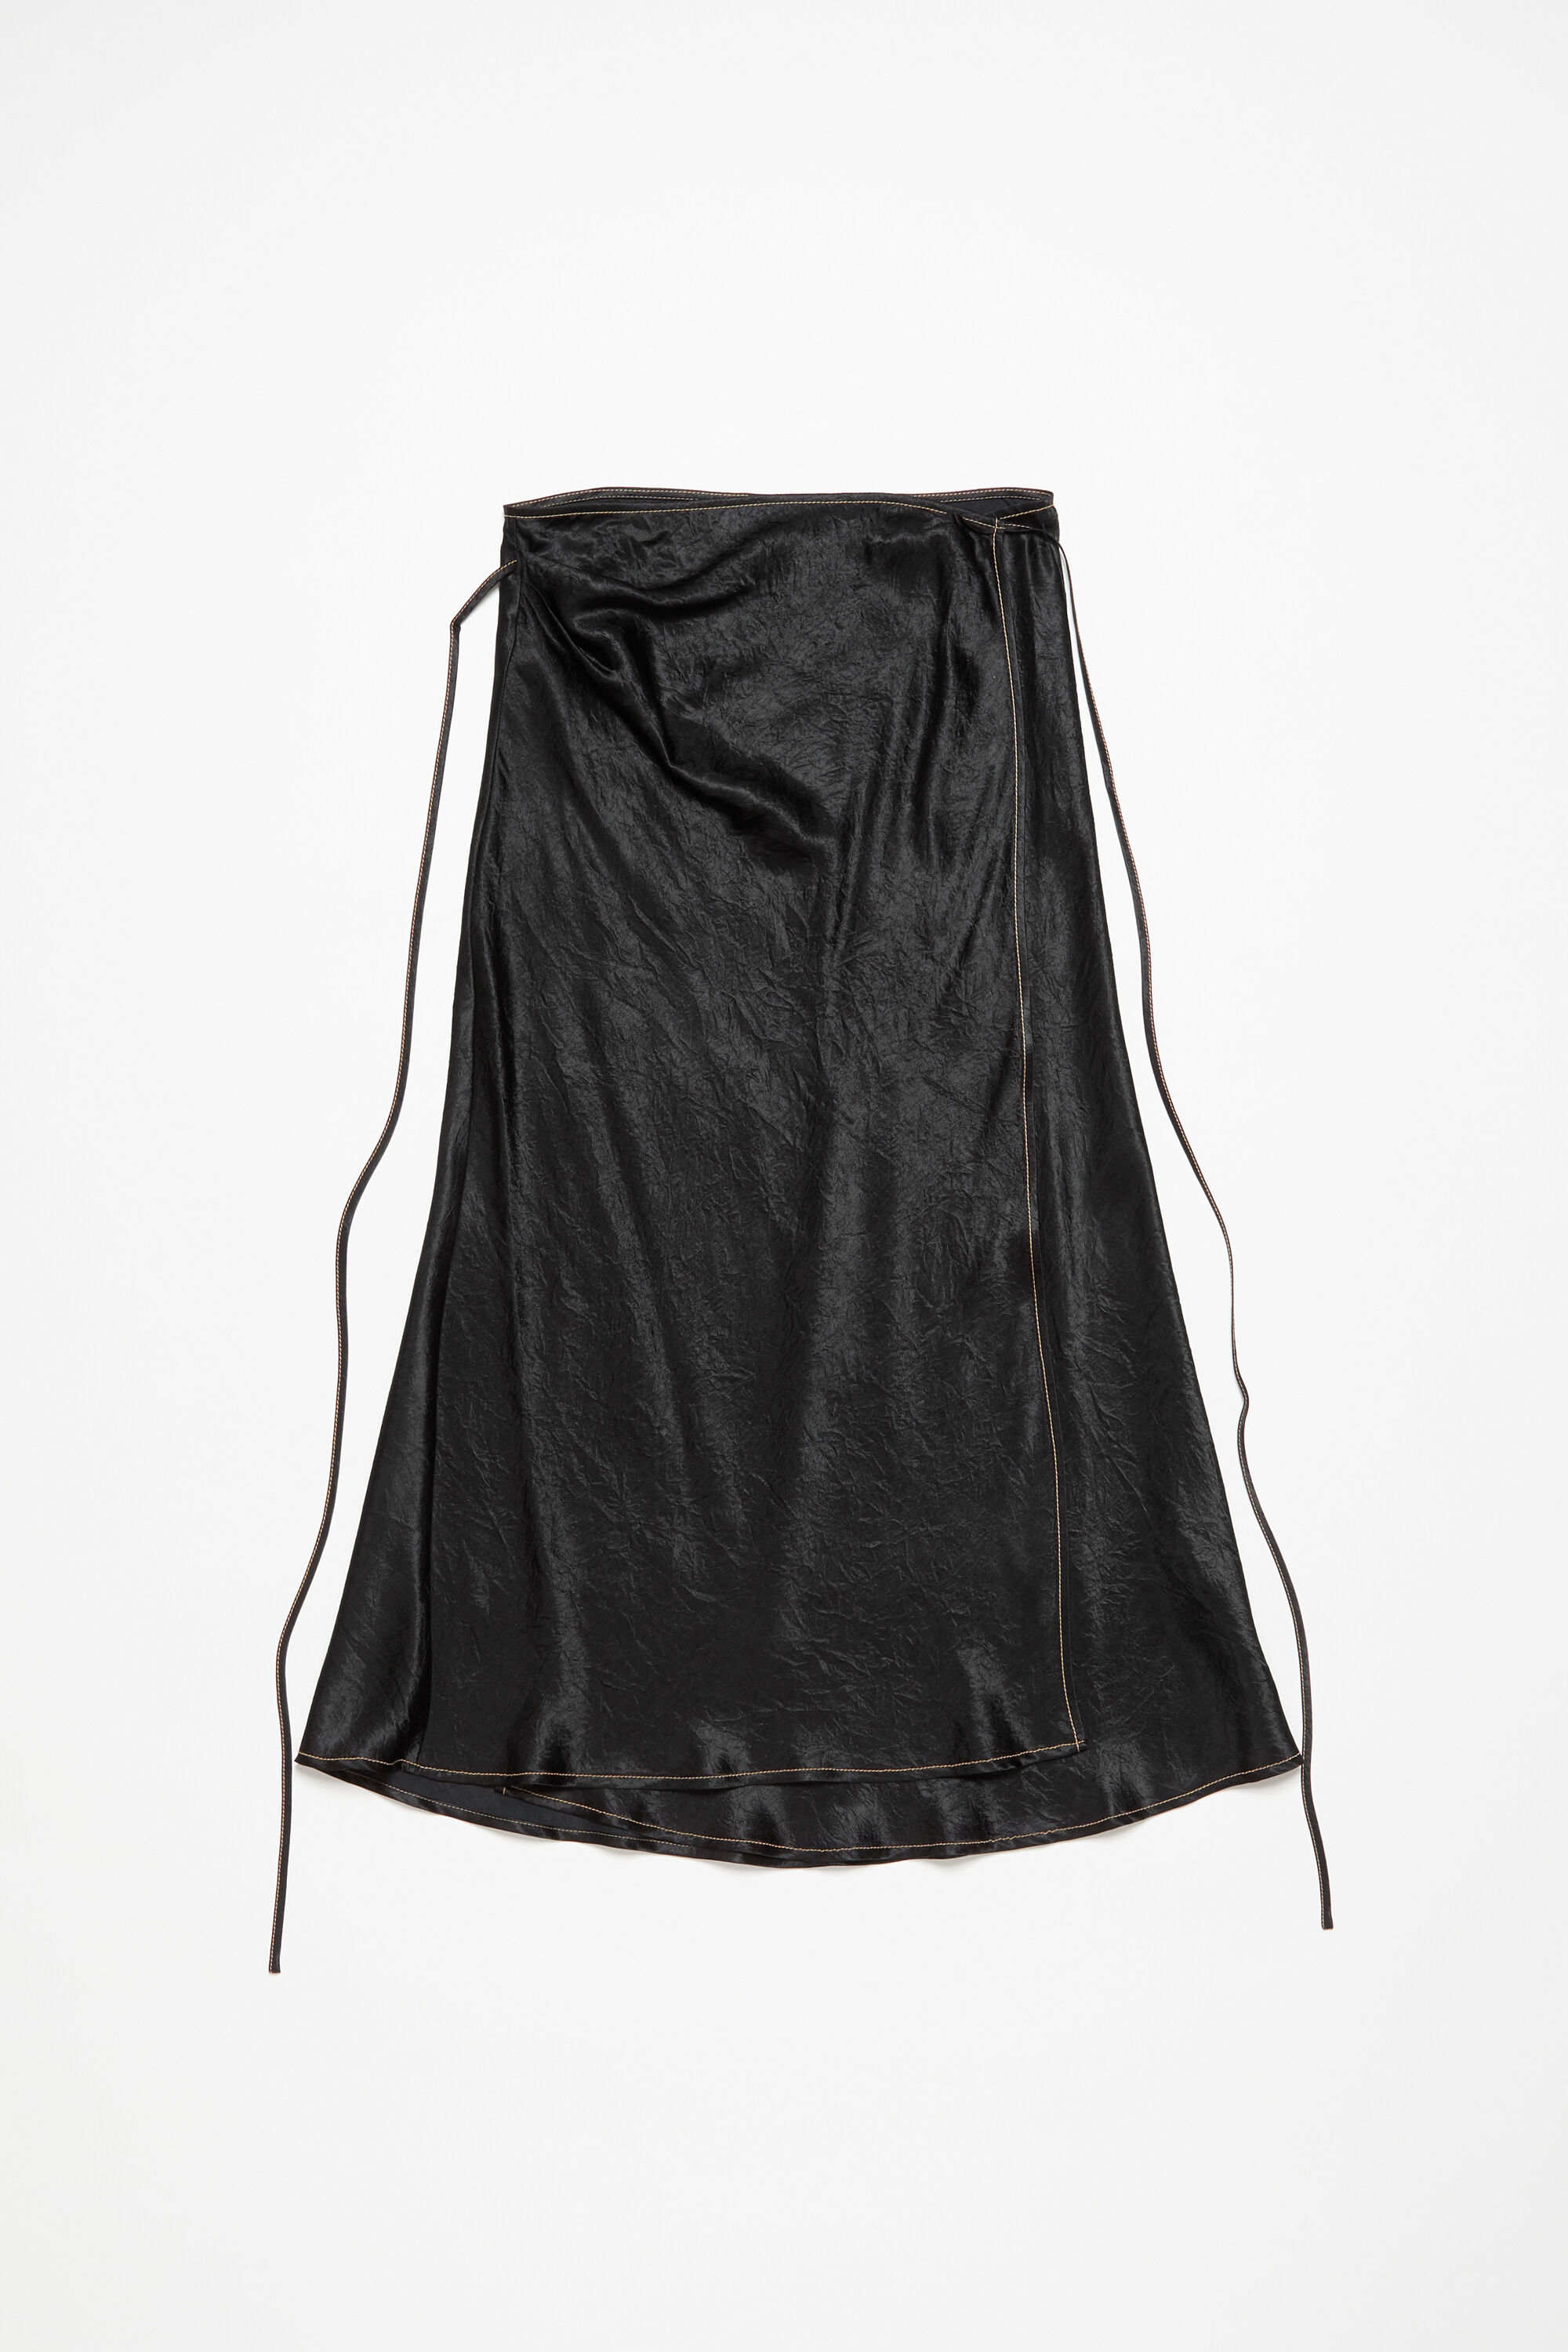 Acne Studios – Women's Skirts